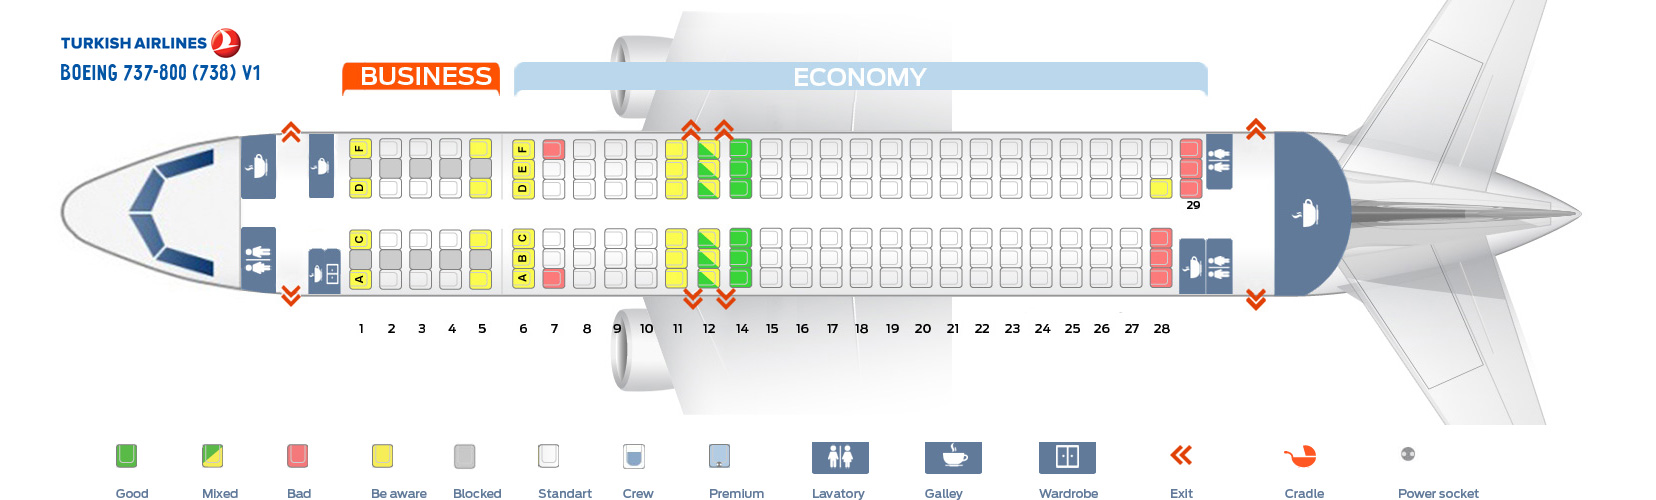 737 800 Jet Seating Chart